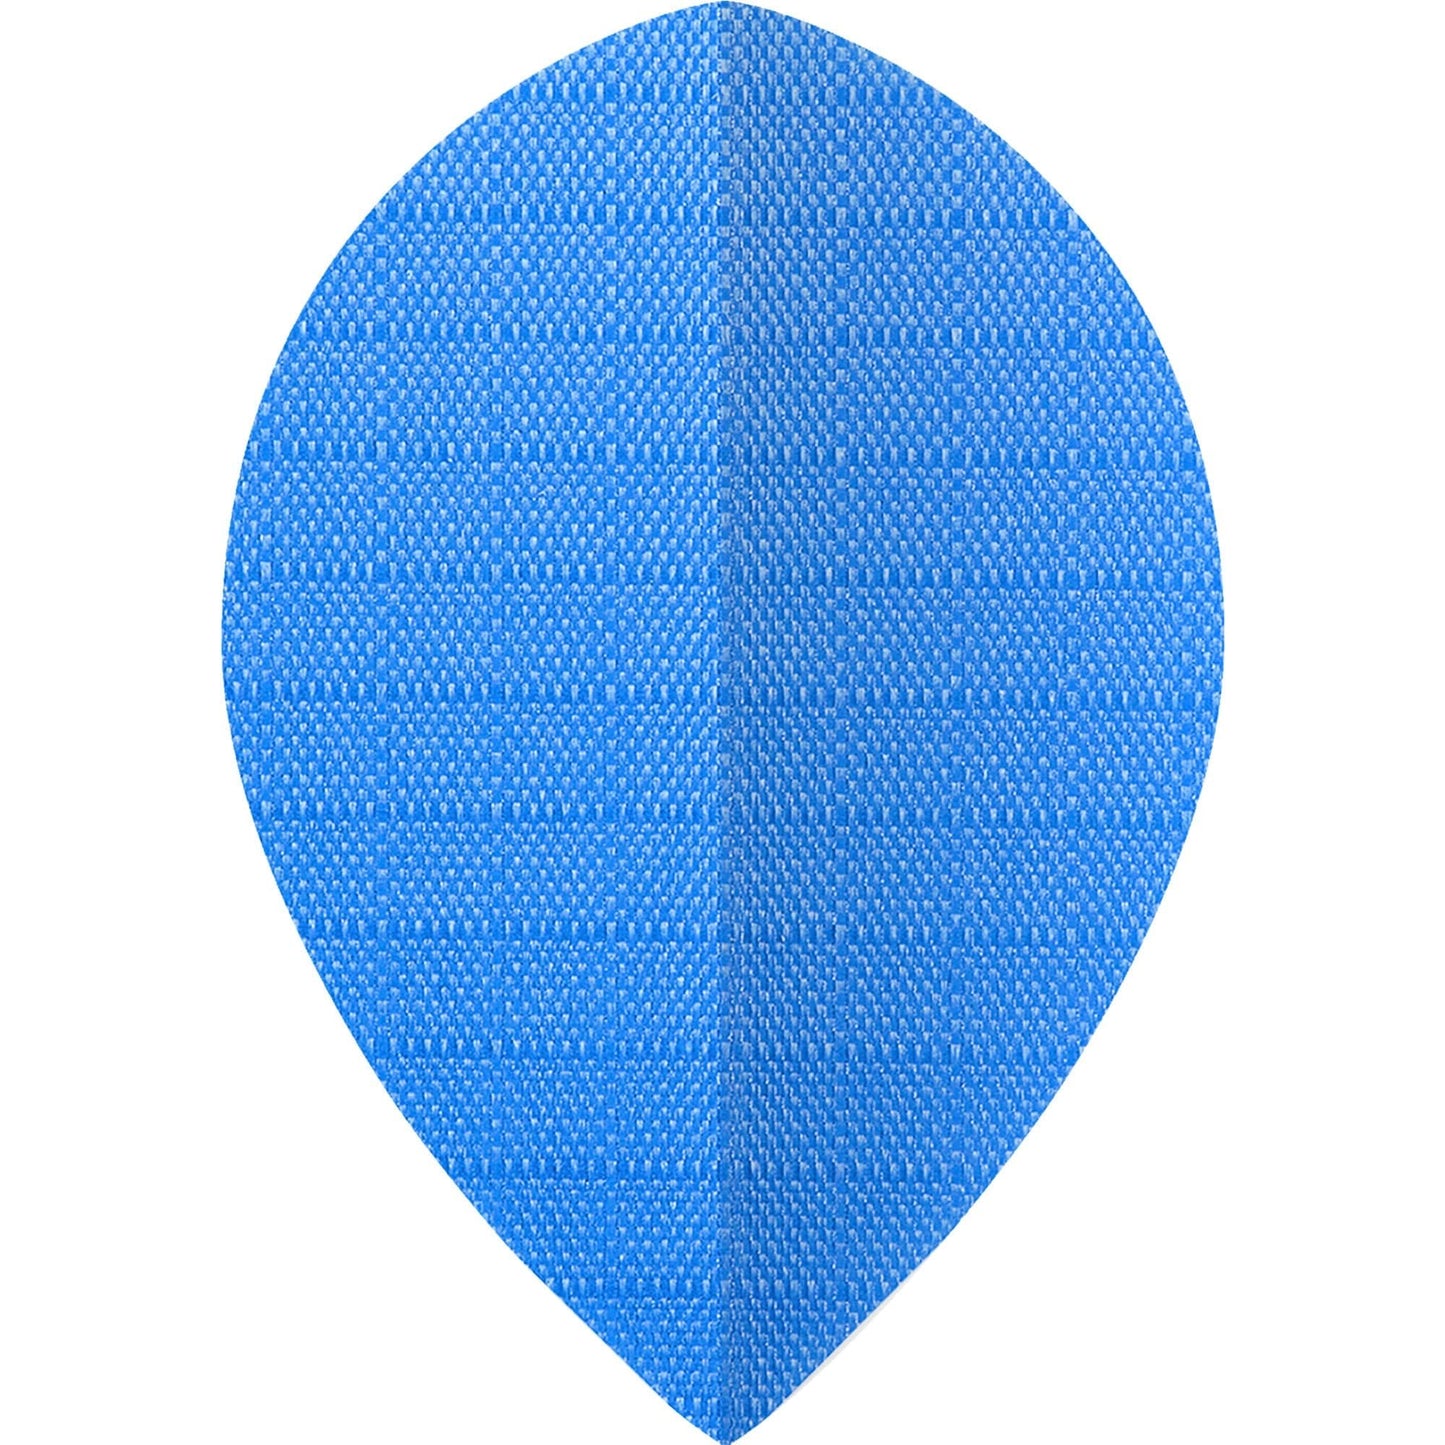 *Designa Dart Flights - Fabric Rip Stop Nylon - Longlife - Pear Sky Blue